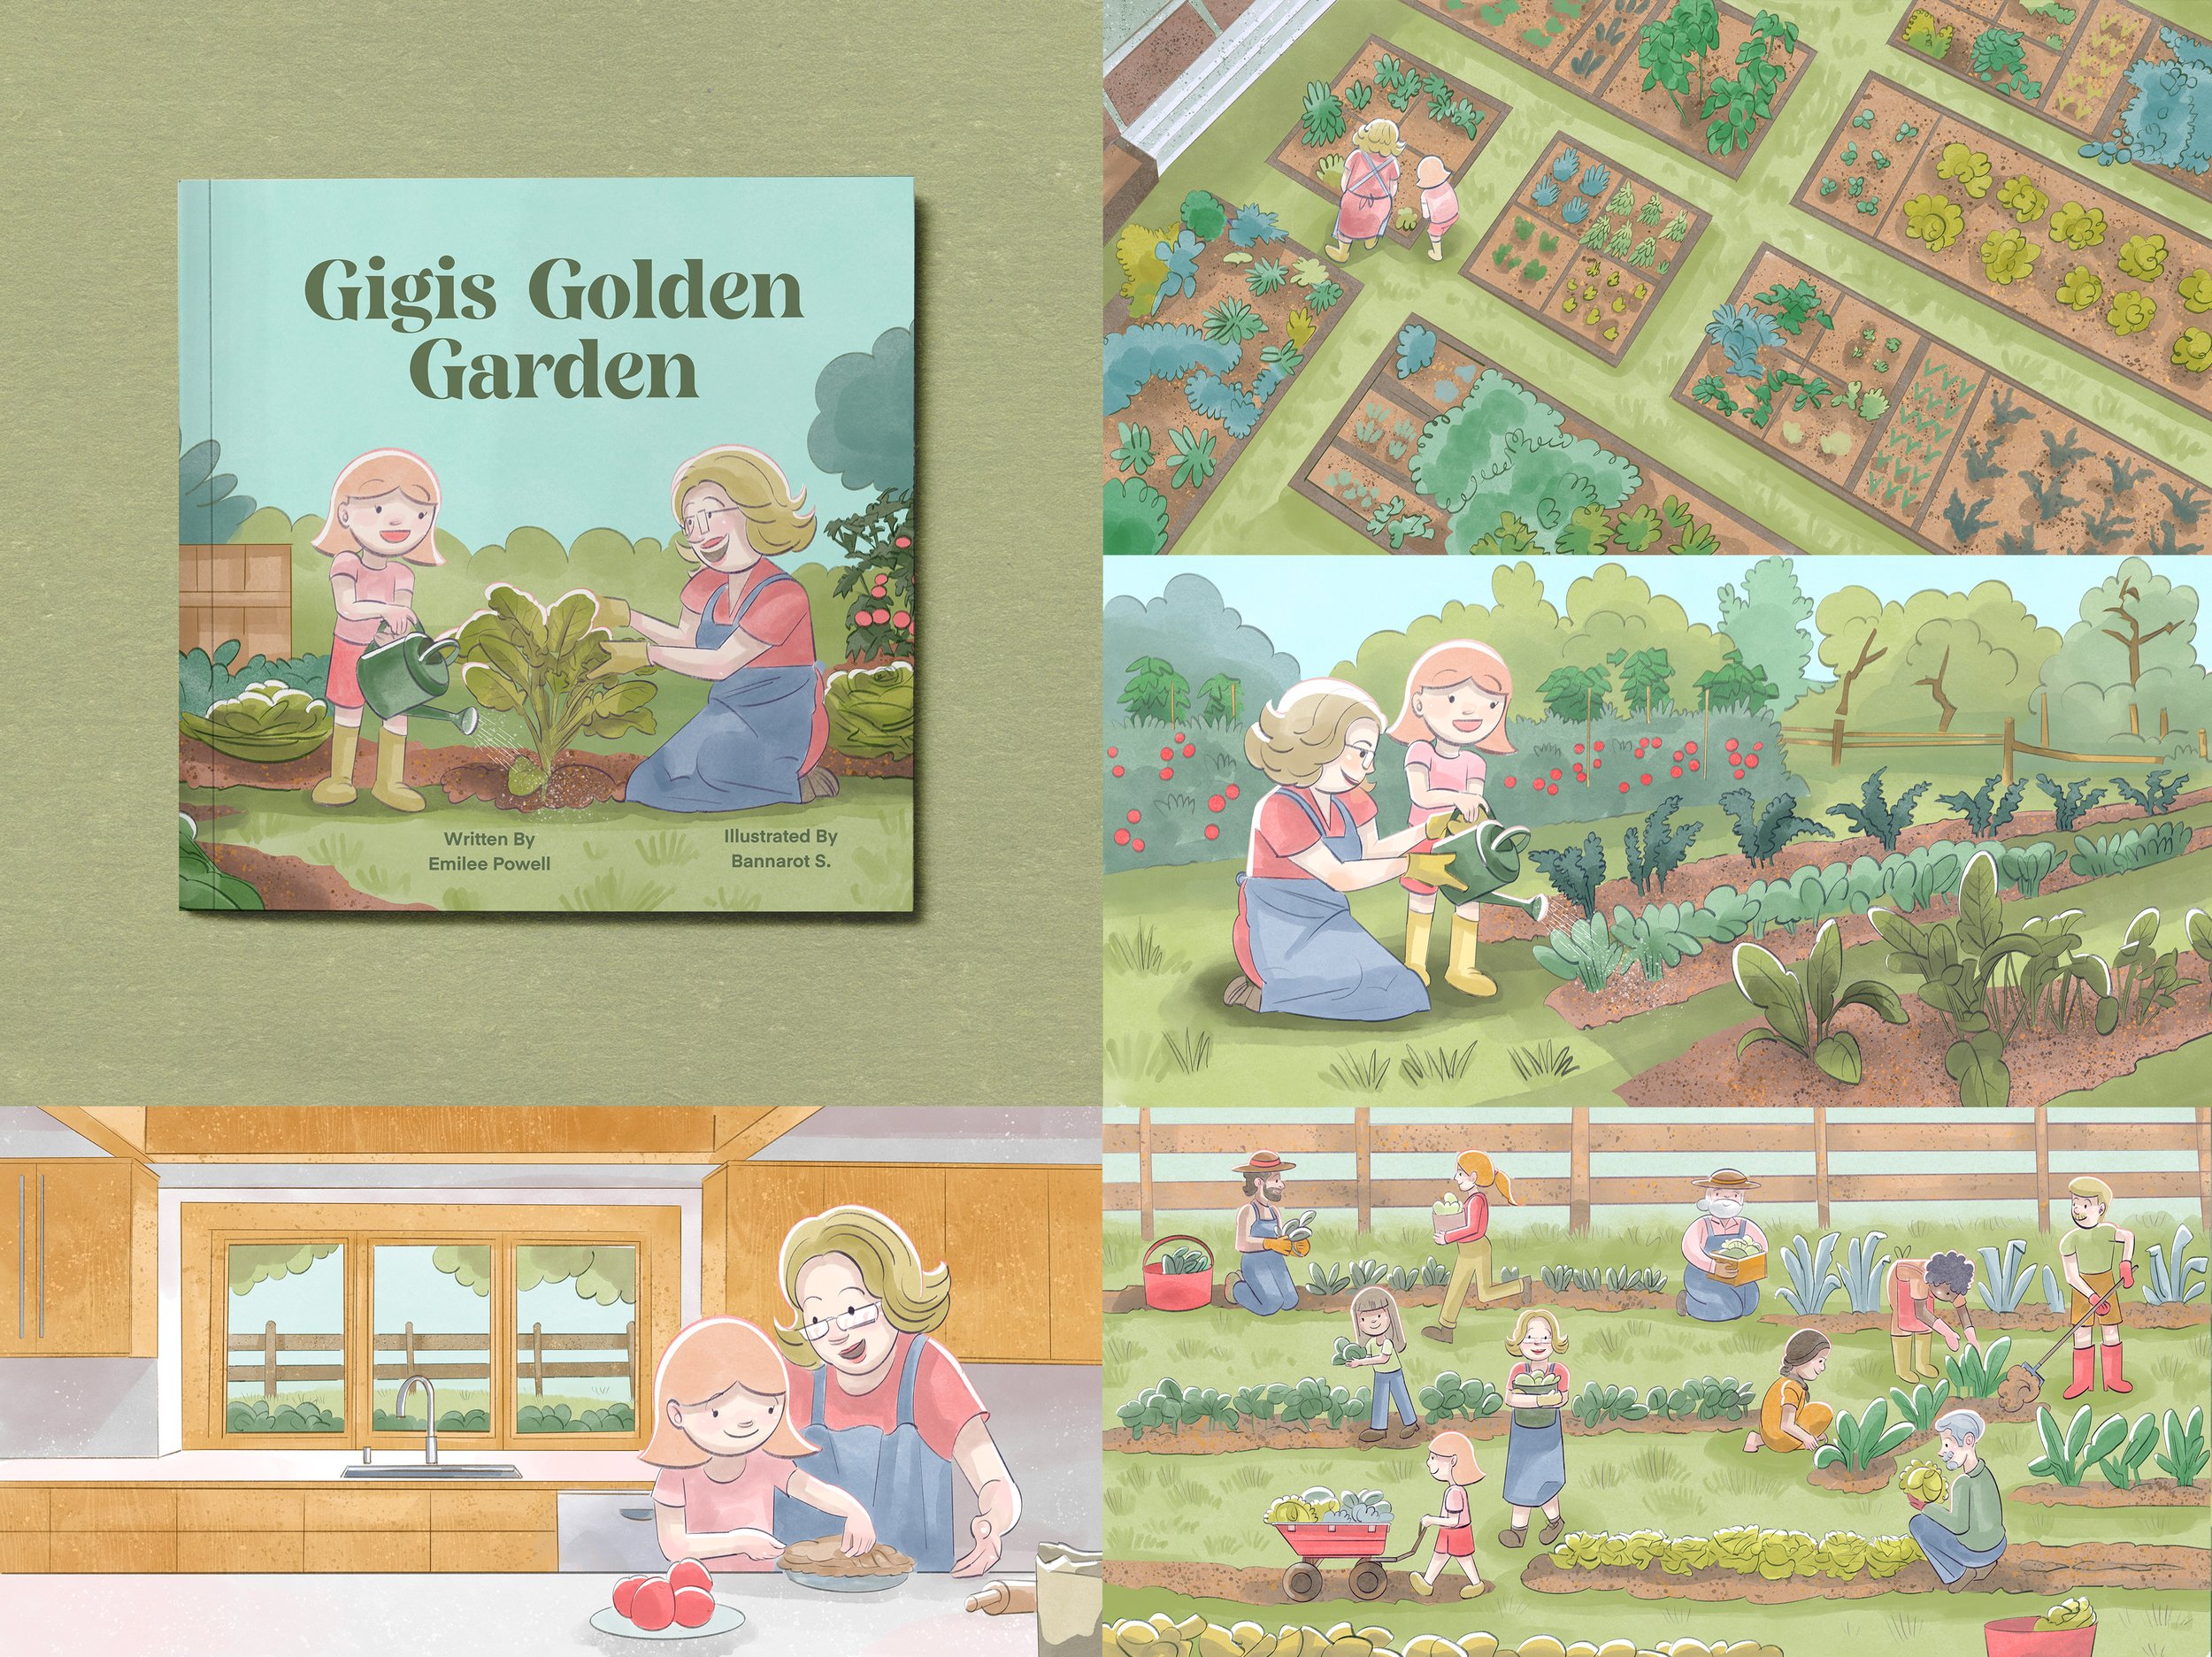 Gigis_Golden_Garden-showcase.jpg